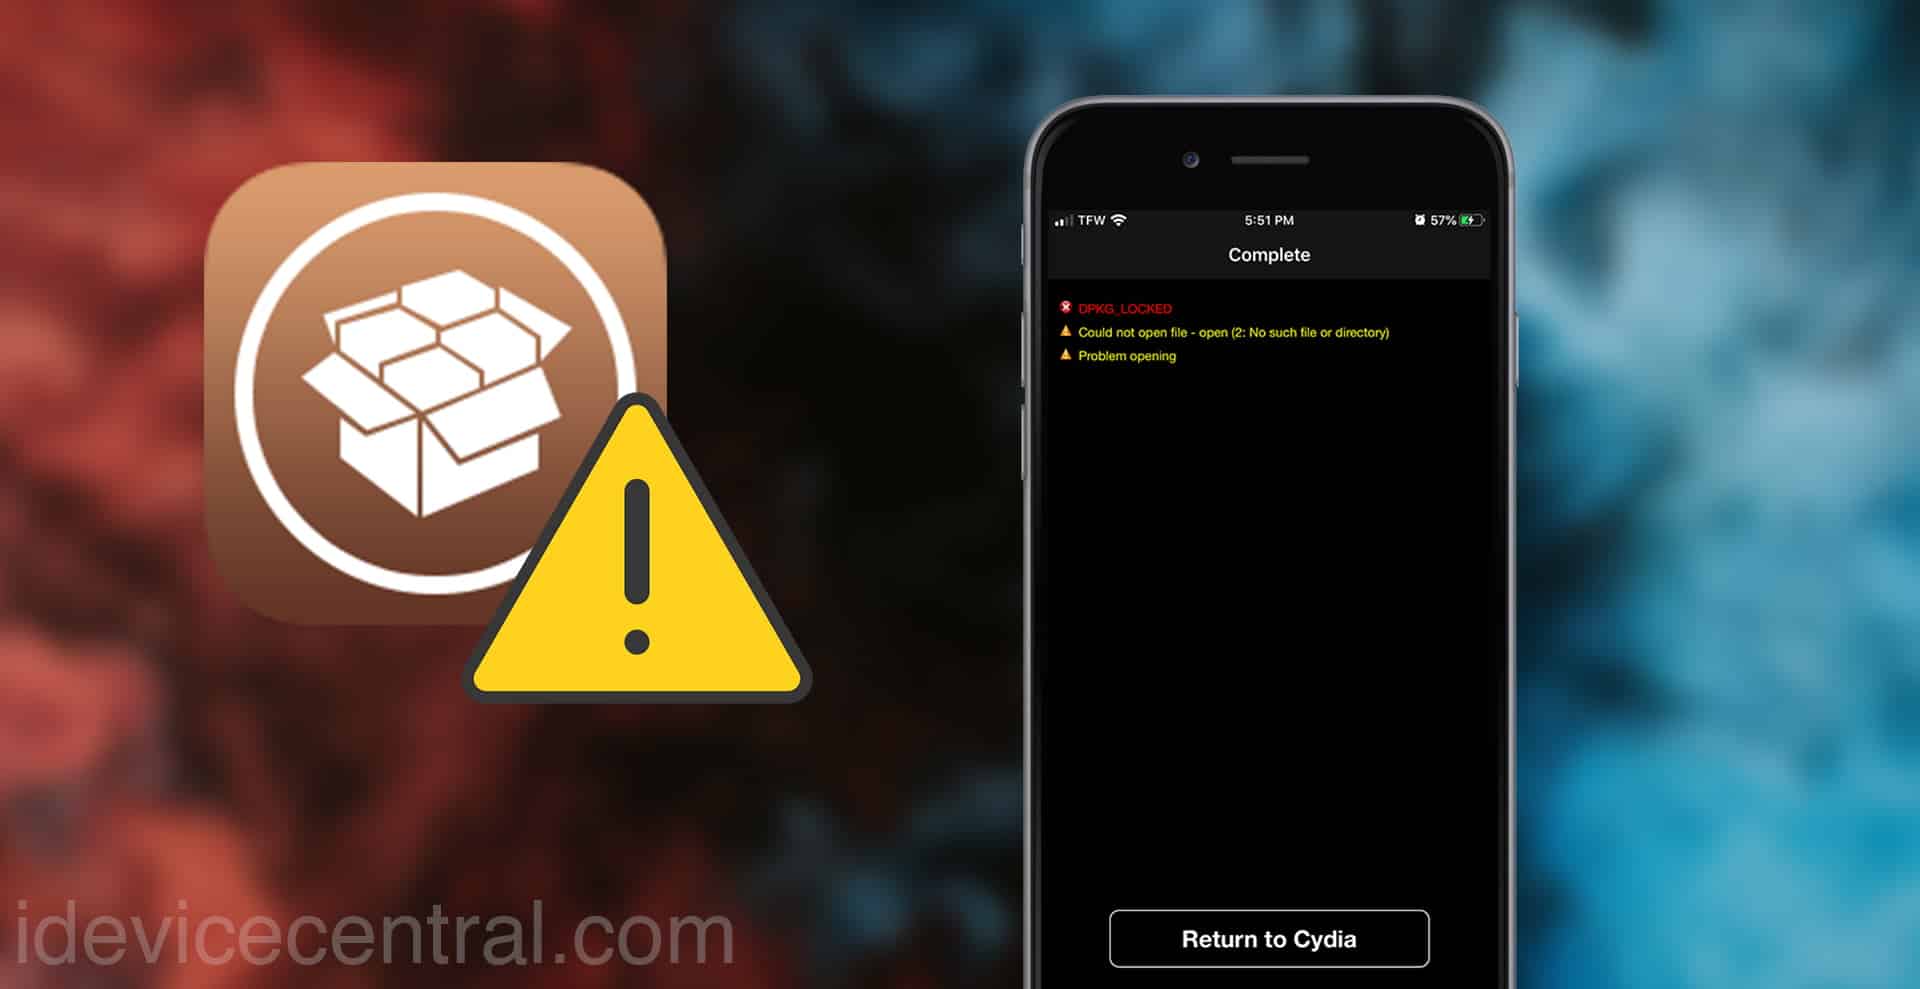 How to fix DPKG_LOCKED error in Cydia / Sileo / Zebra on iOS Jailbreaks